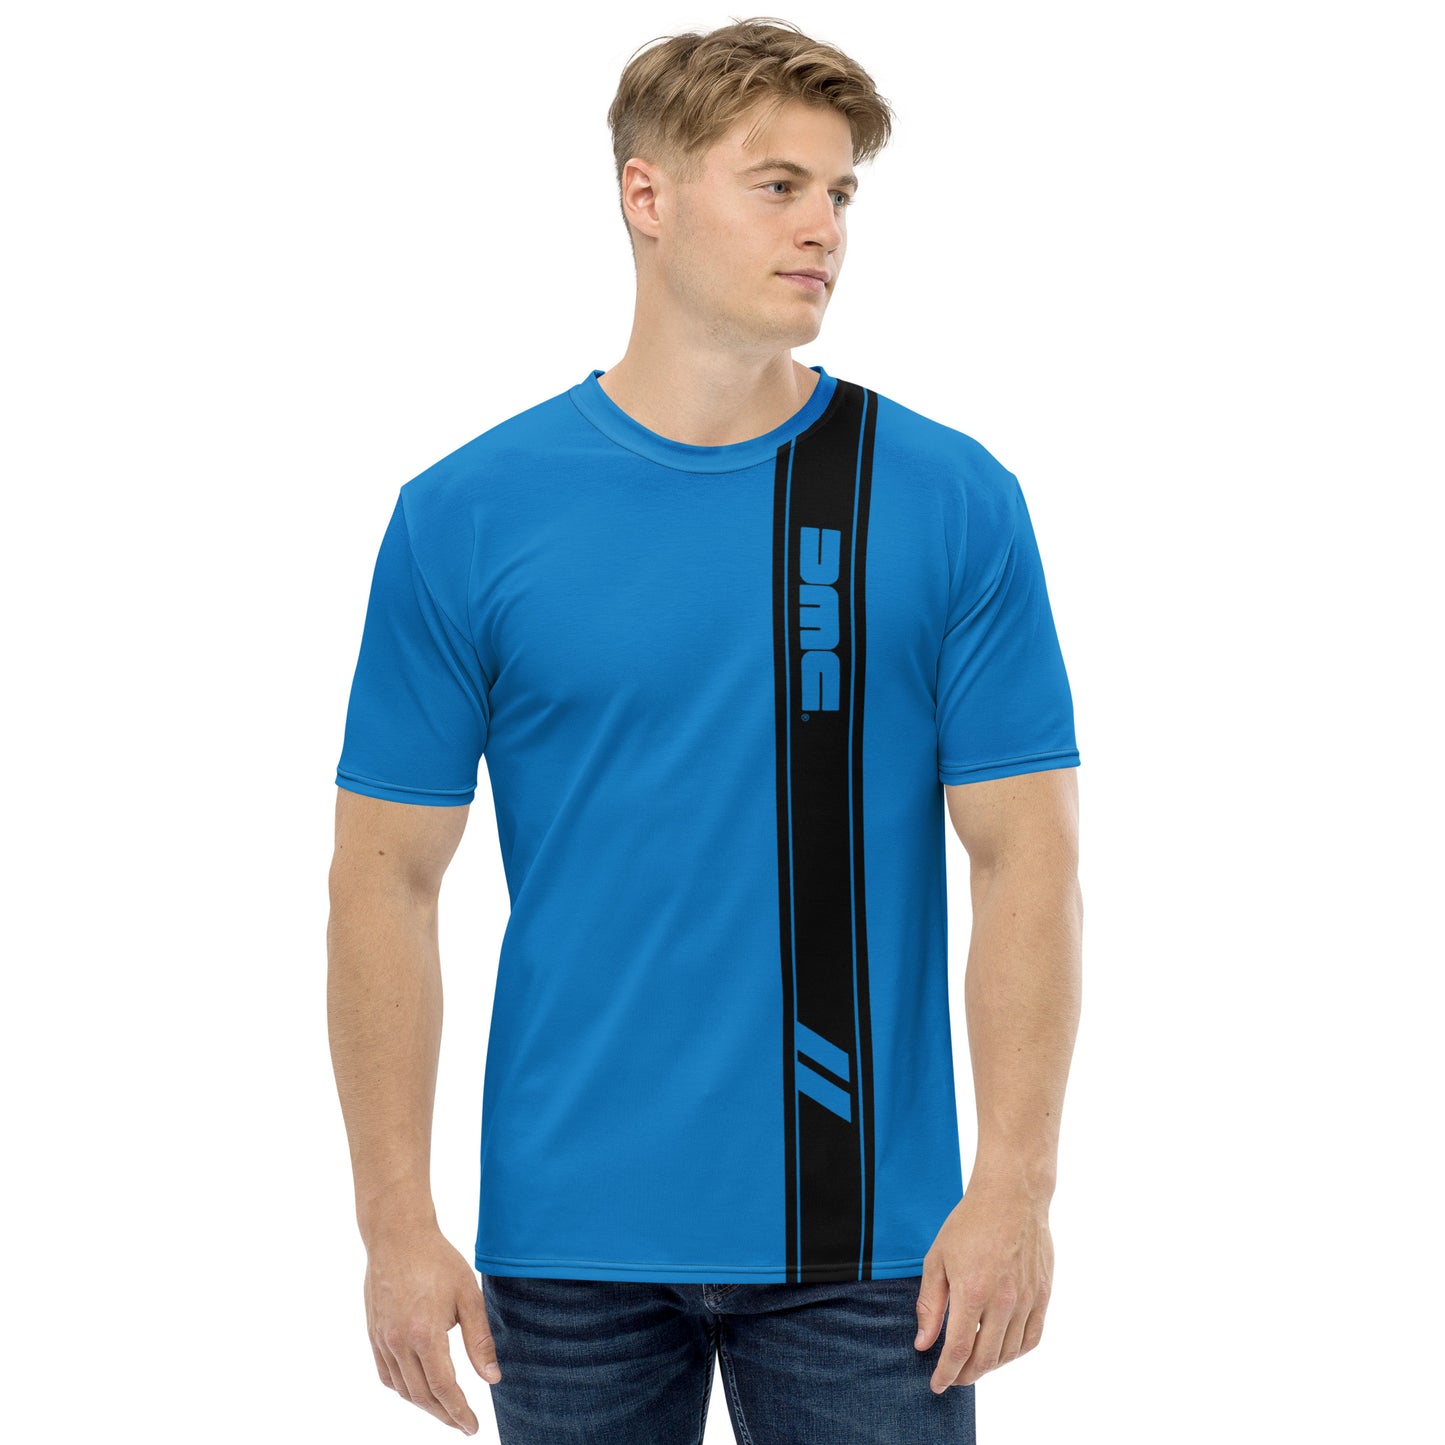 DeLorean Stripe T-Shirt (Blue)